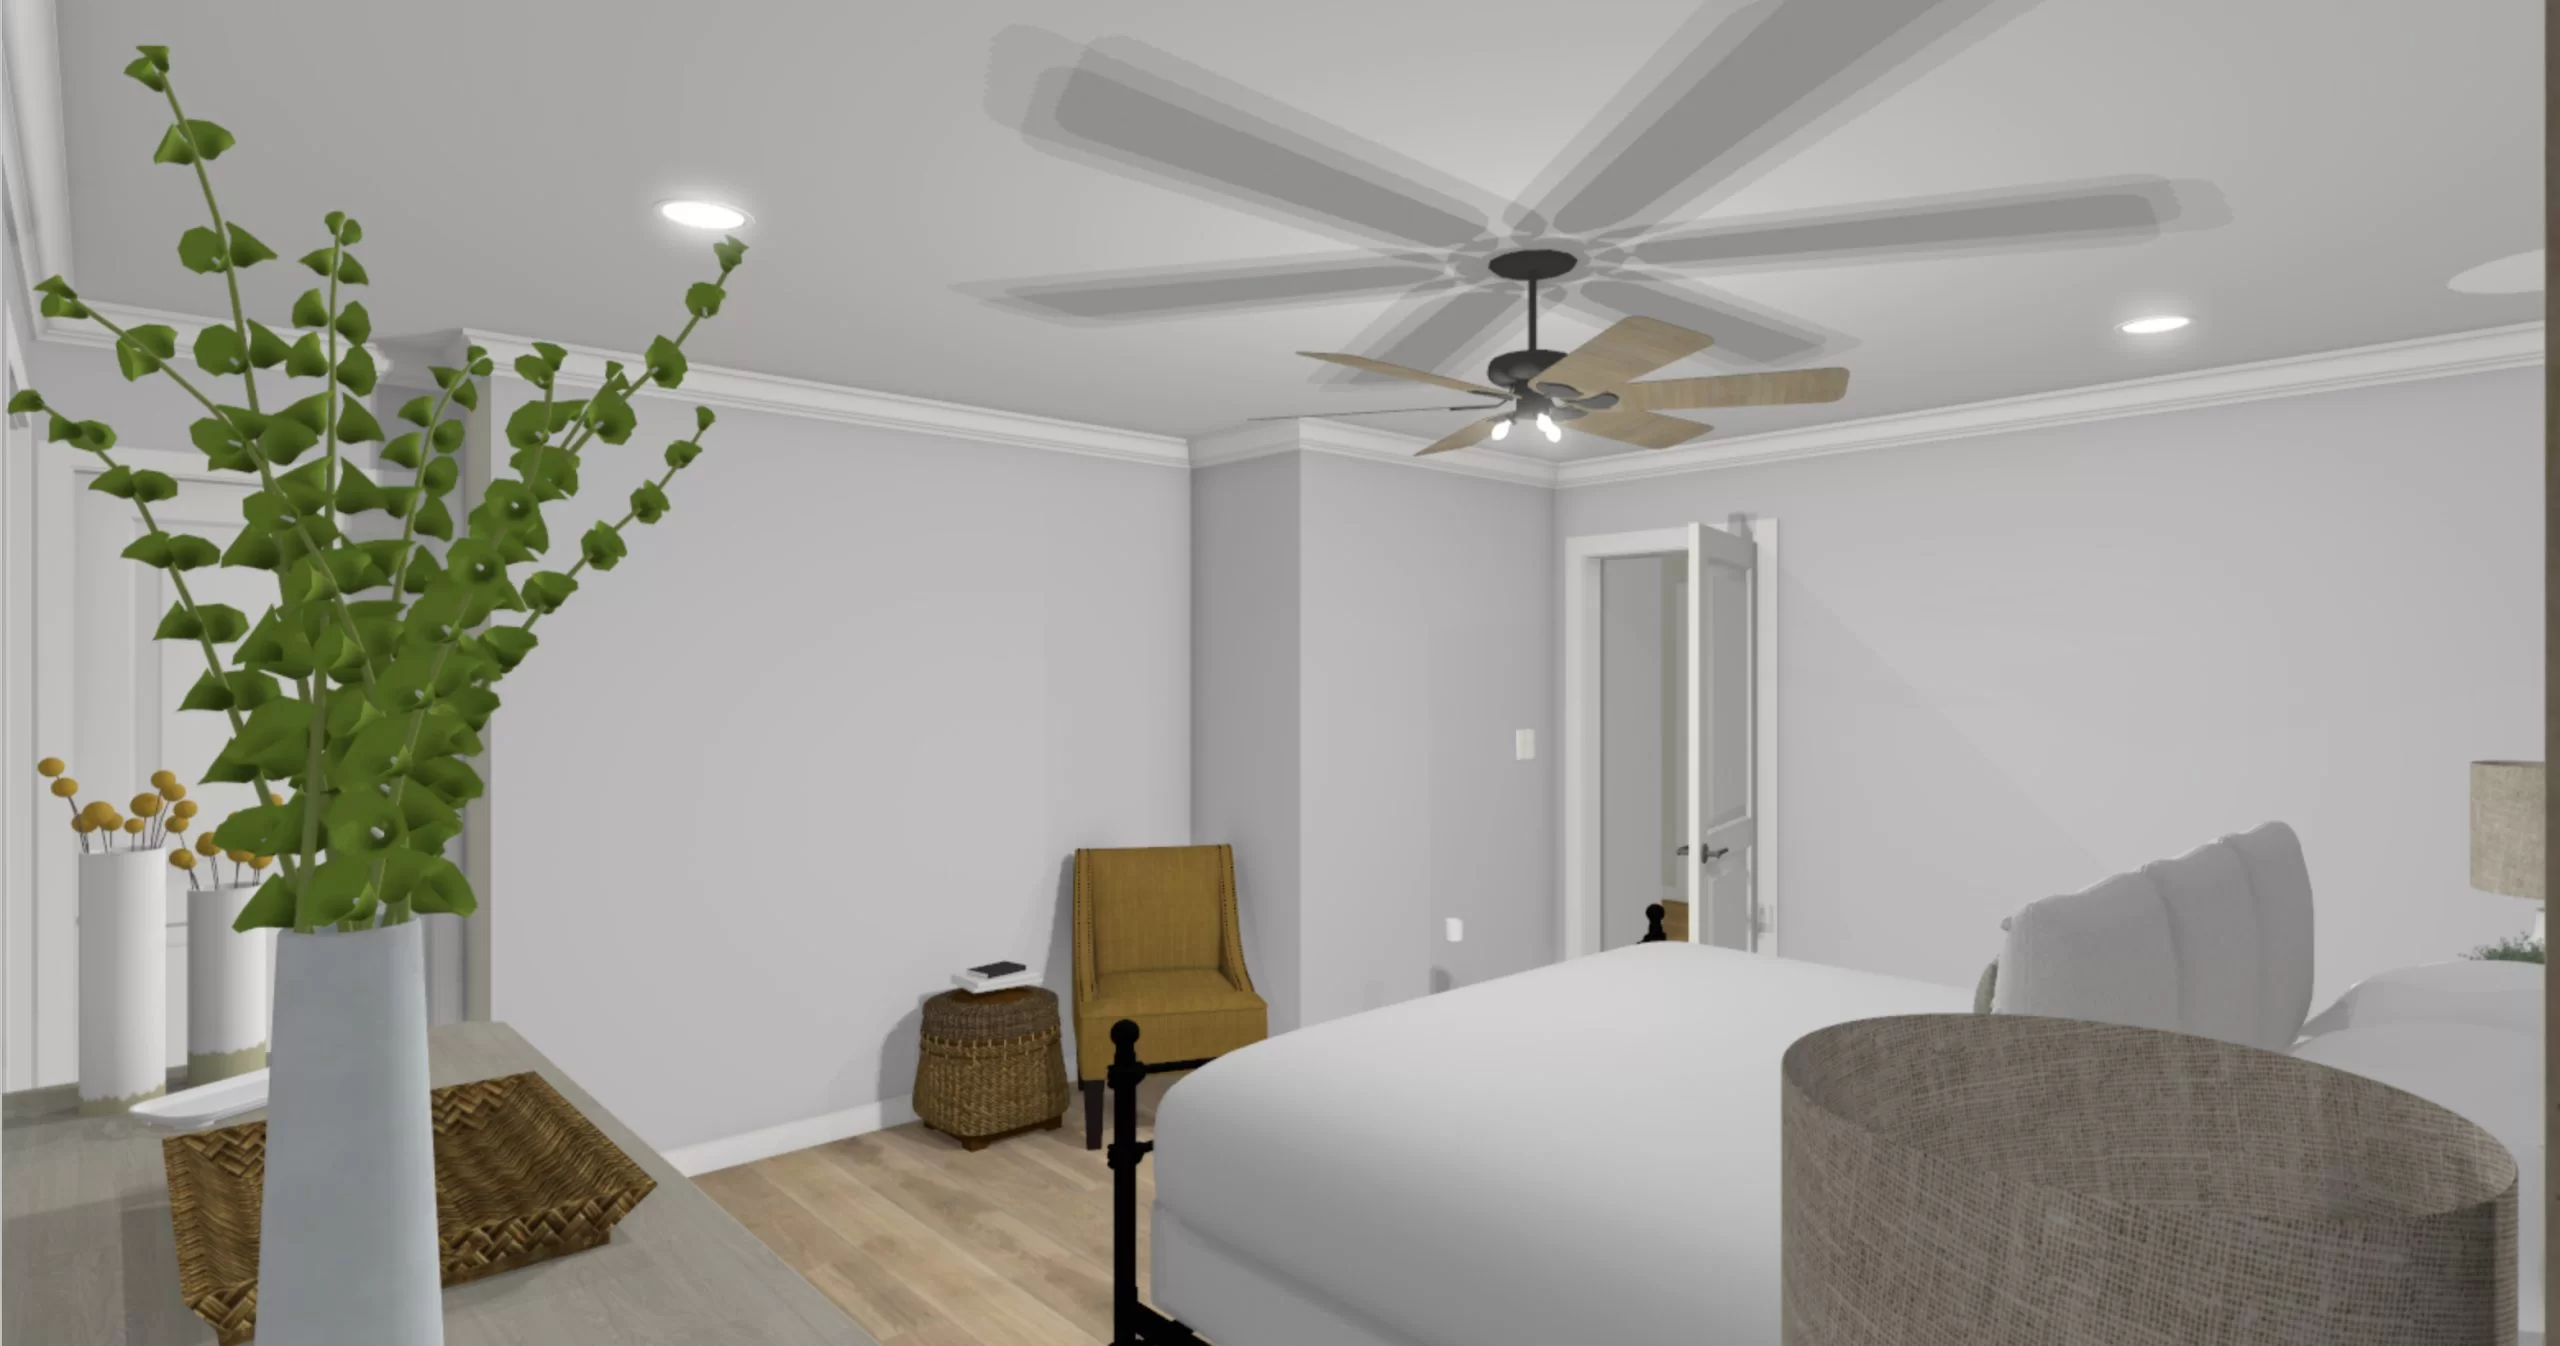 Master bedroom addition in 3D rendering